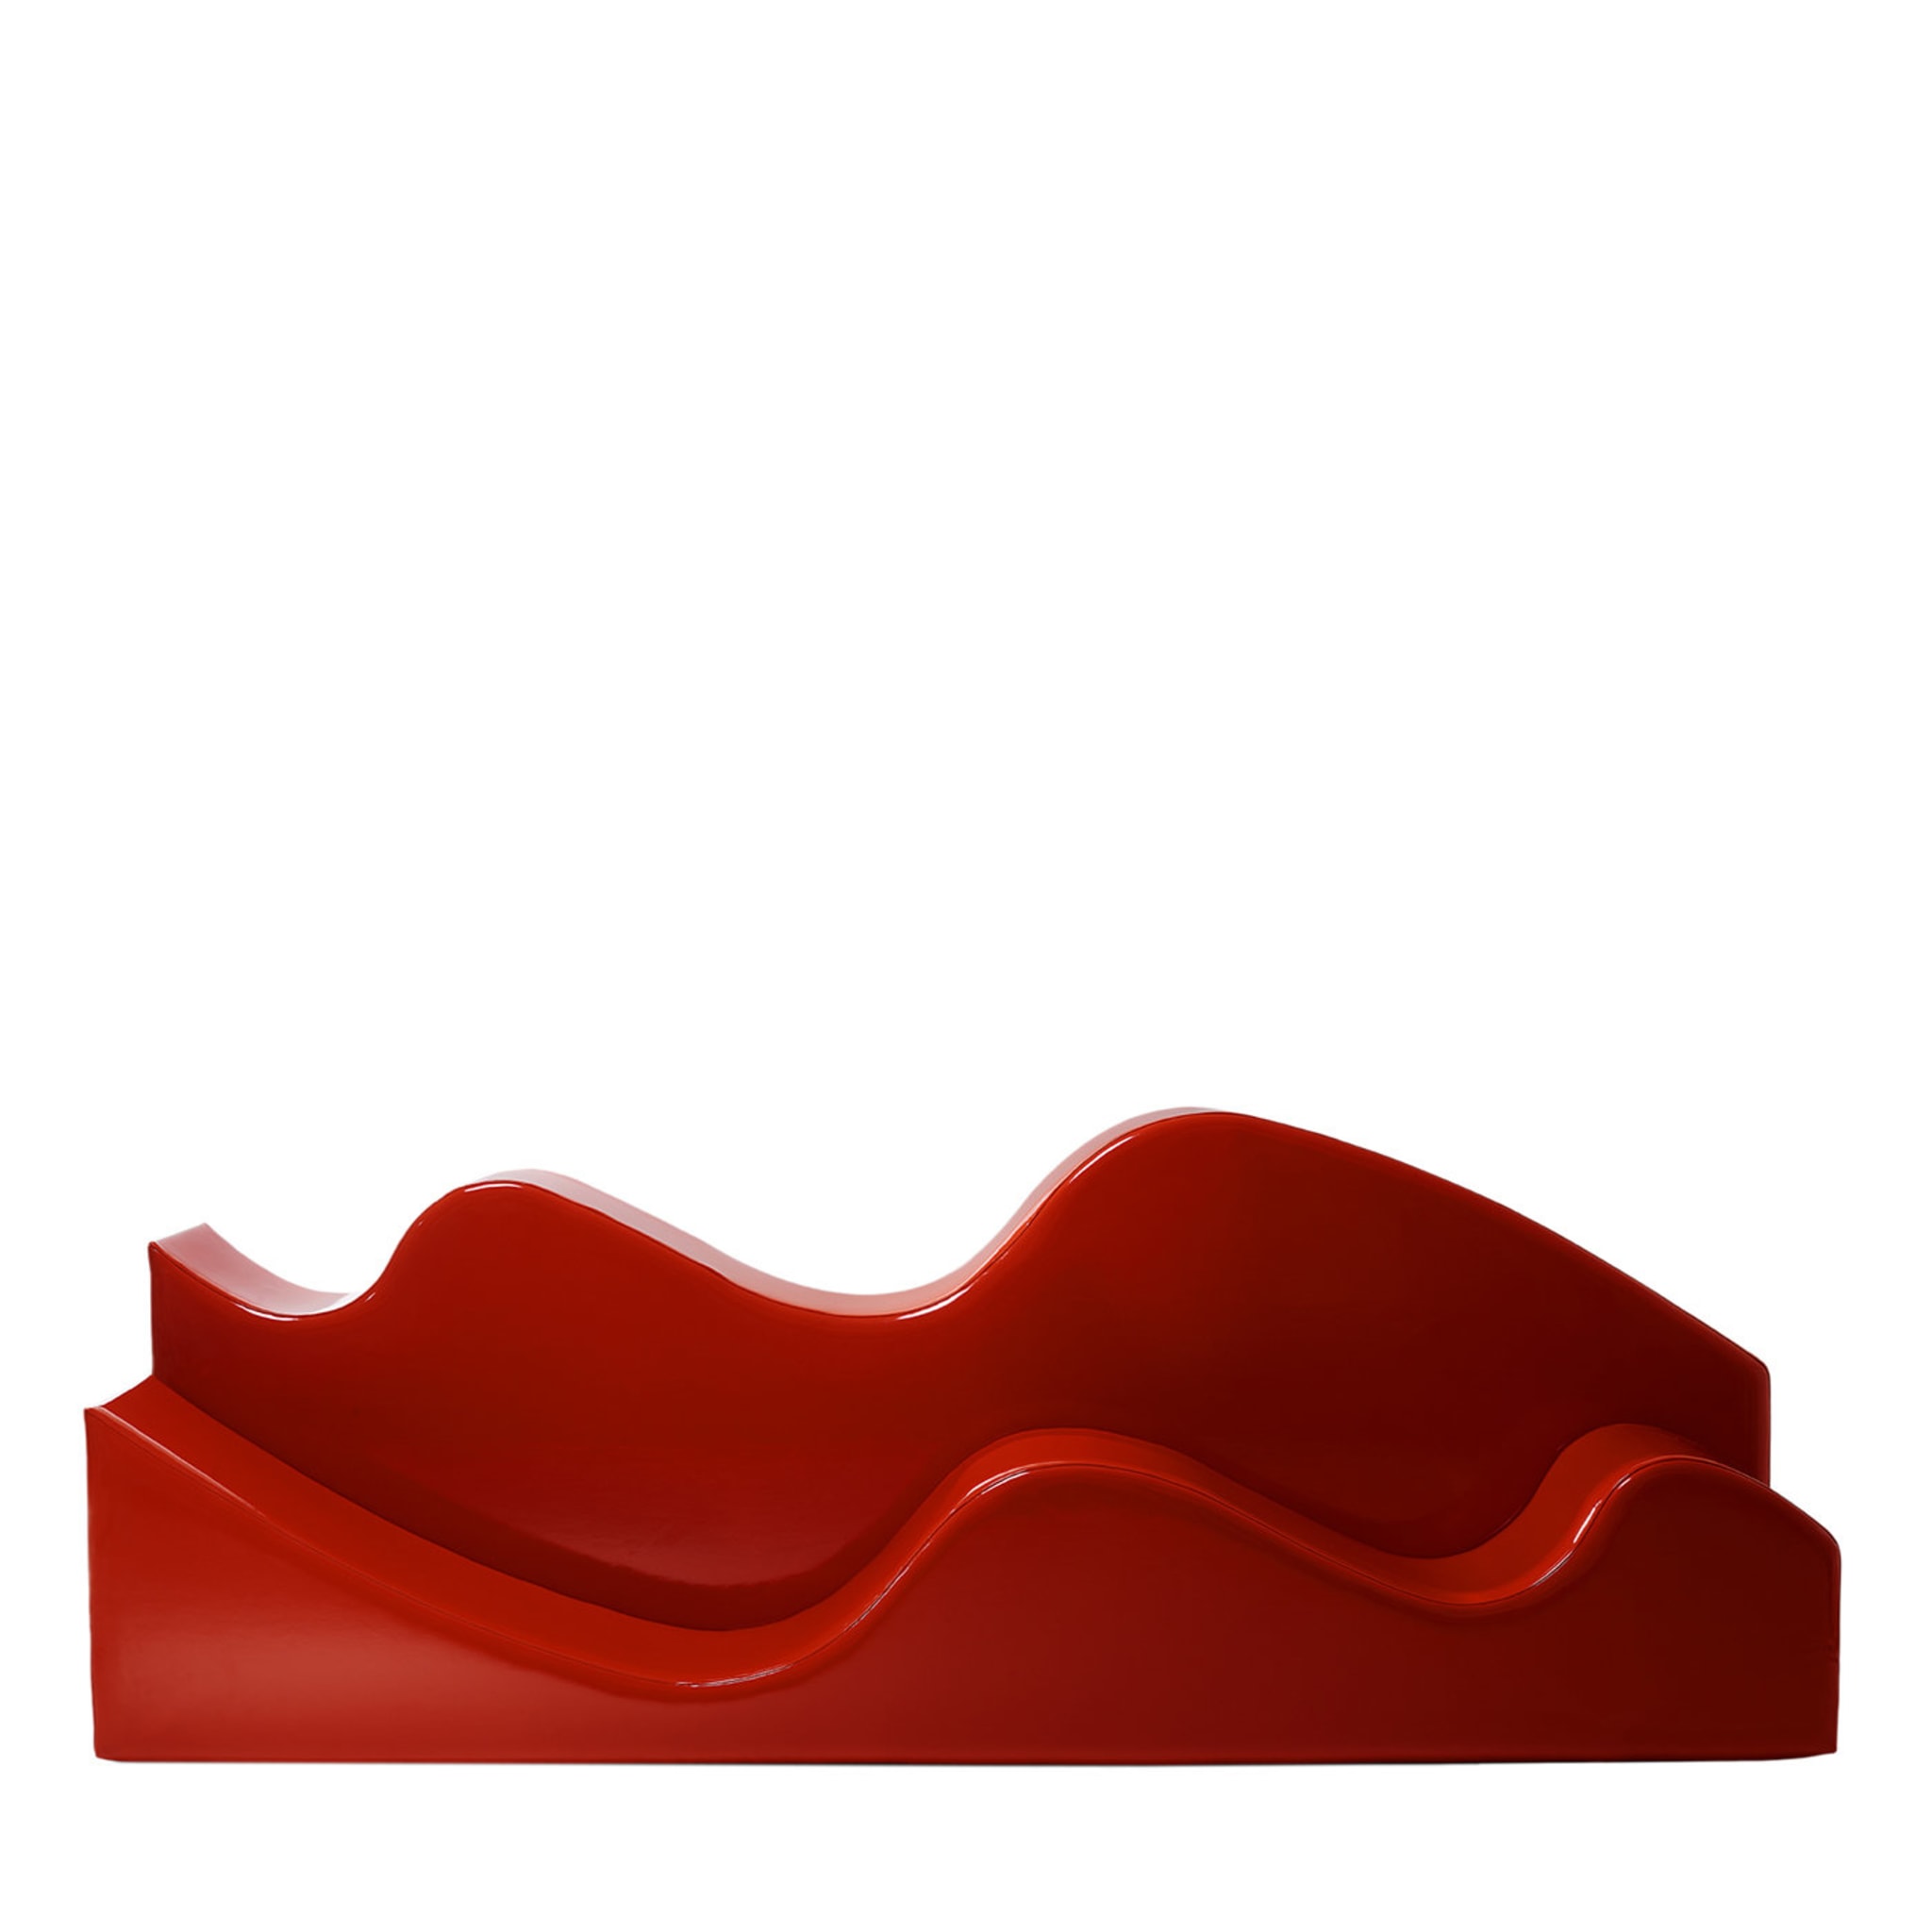 Superonda Red Sofa by Archizoom - Main view